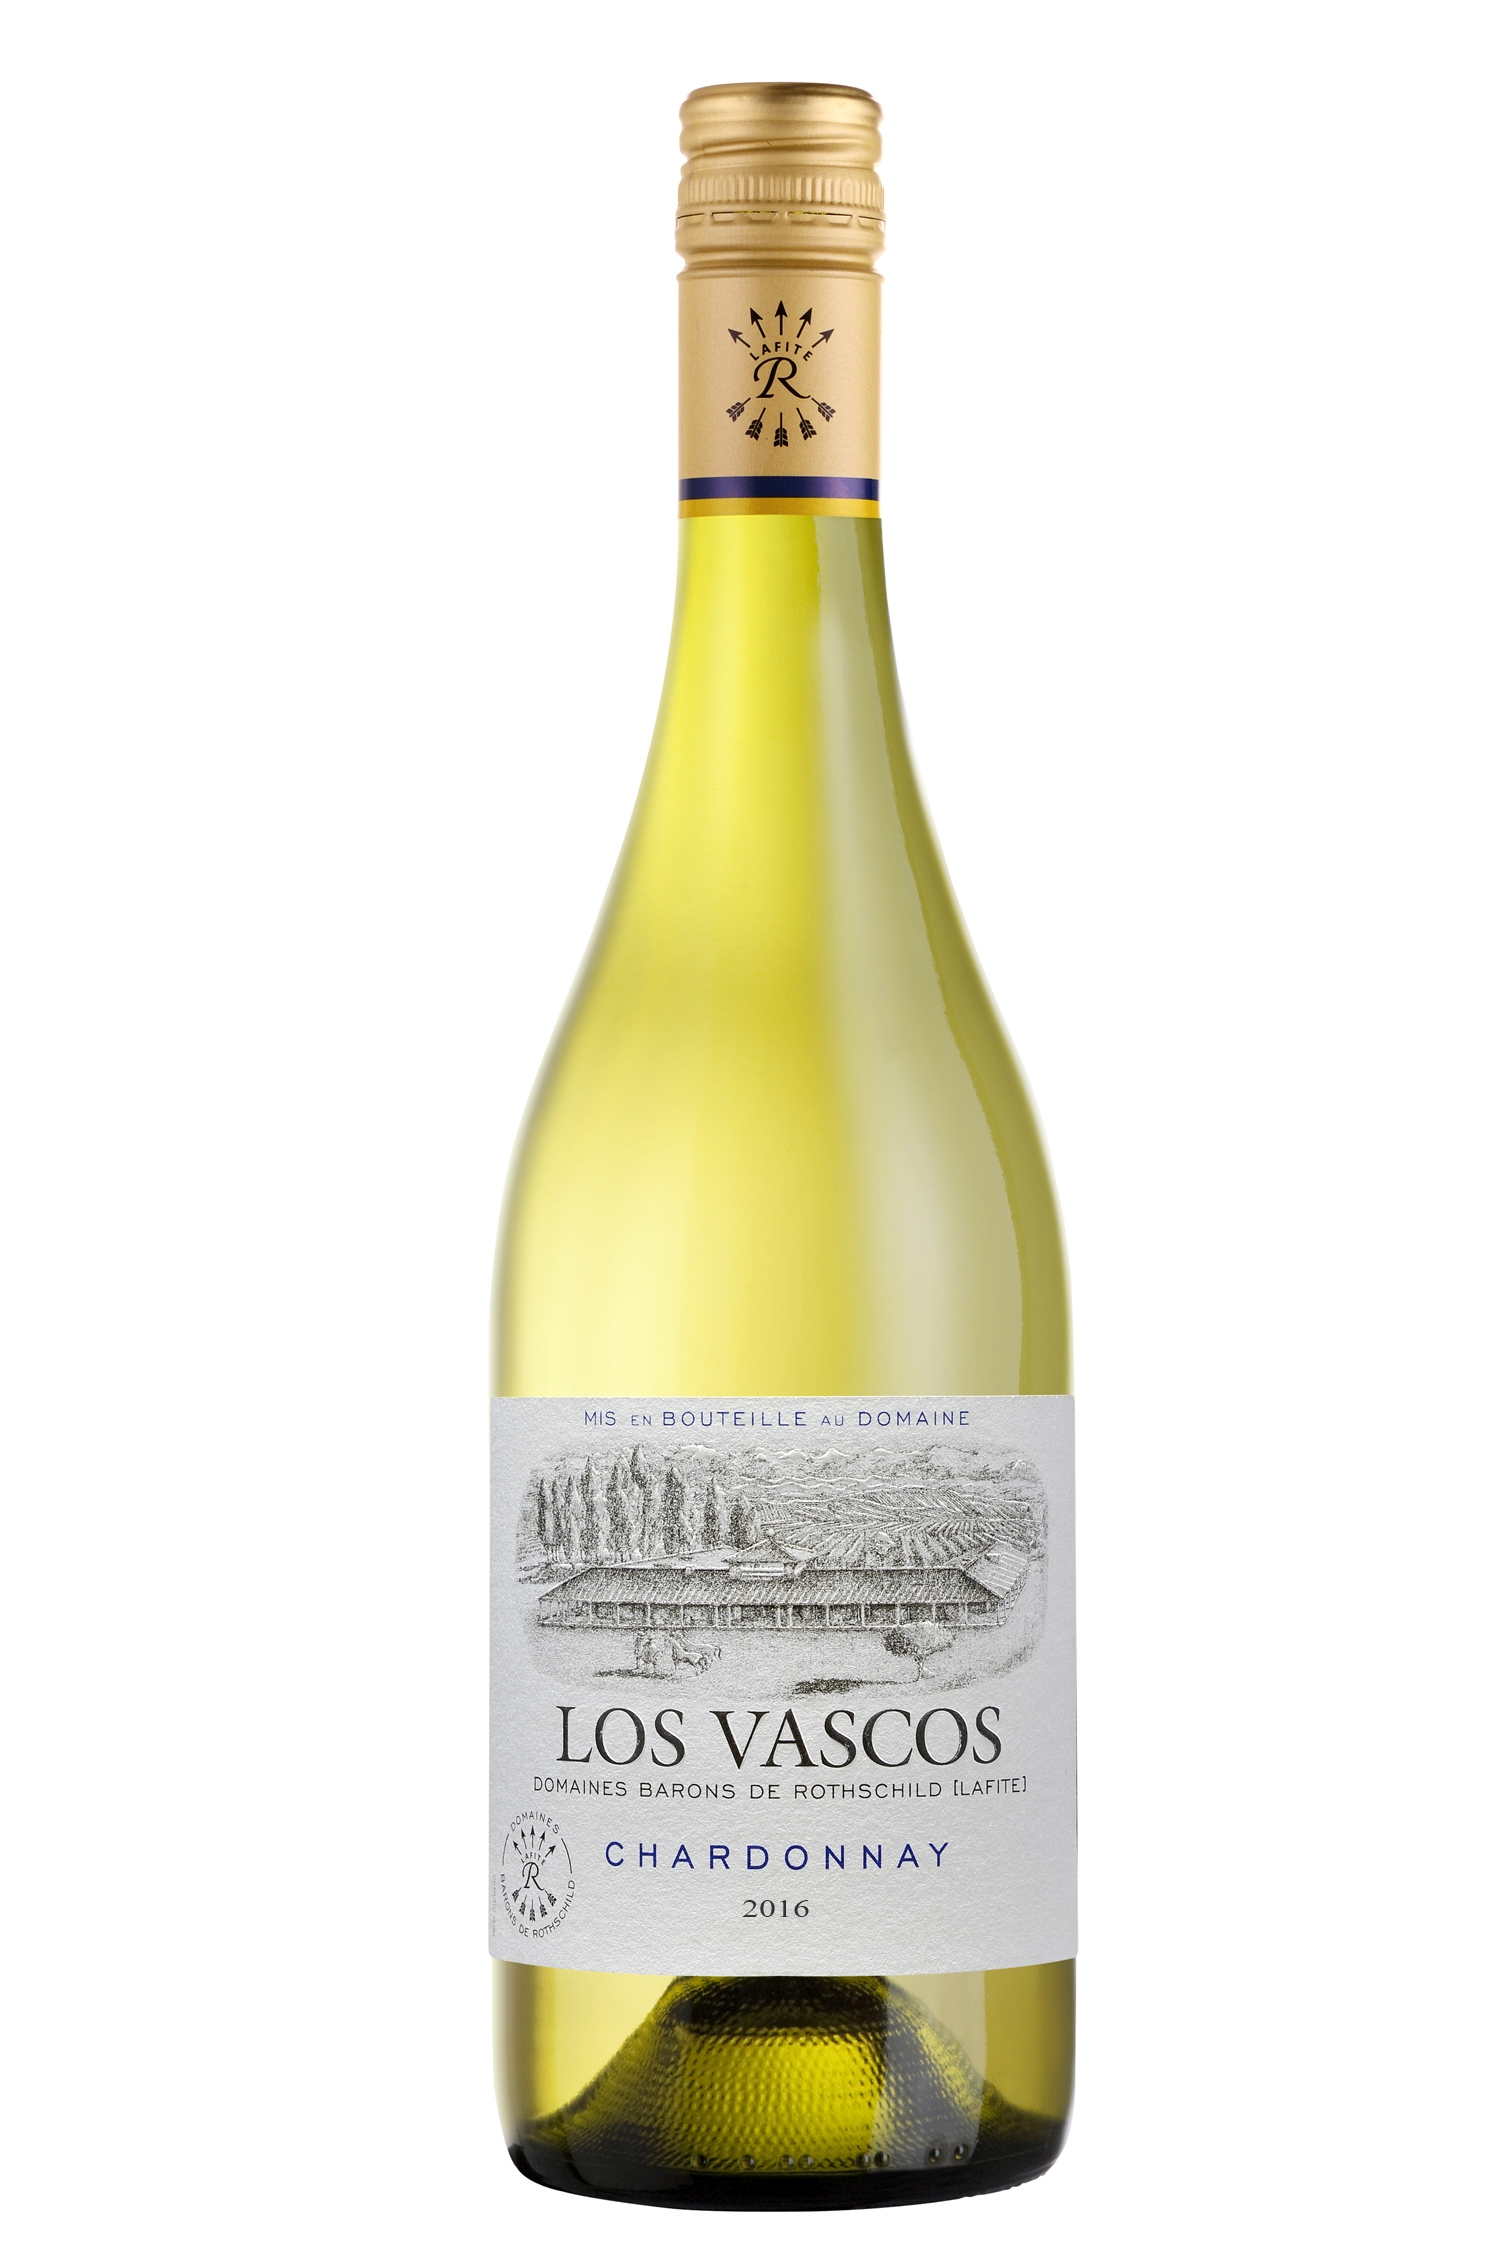 Domaines Barons de Rothschild, Los Vascos, Chardonnay, dry, white  